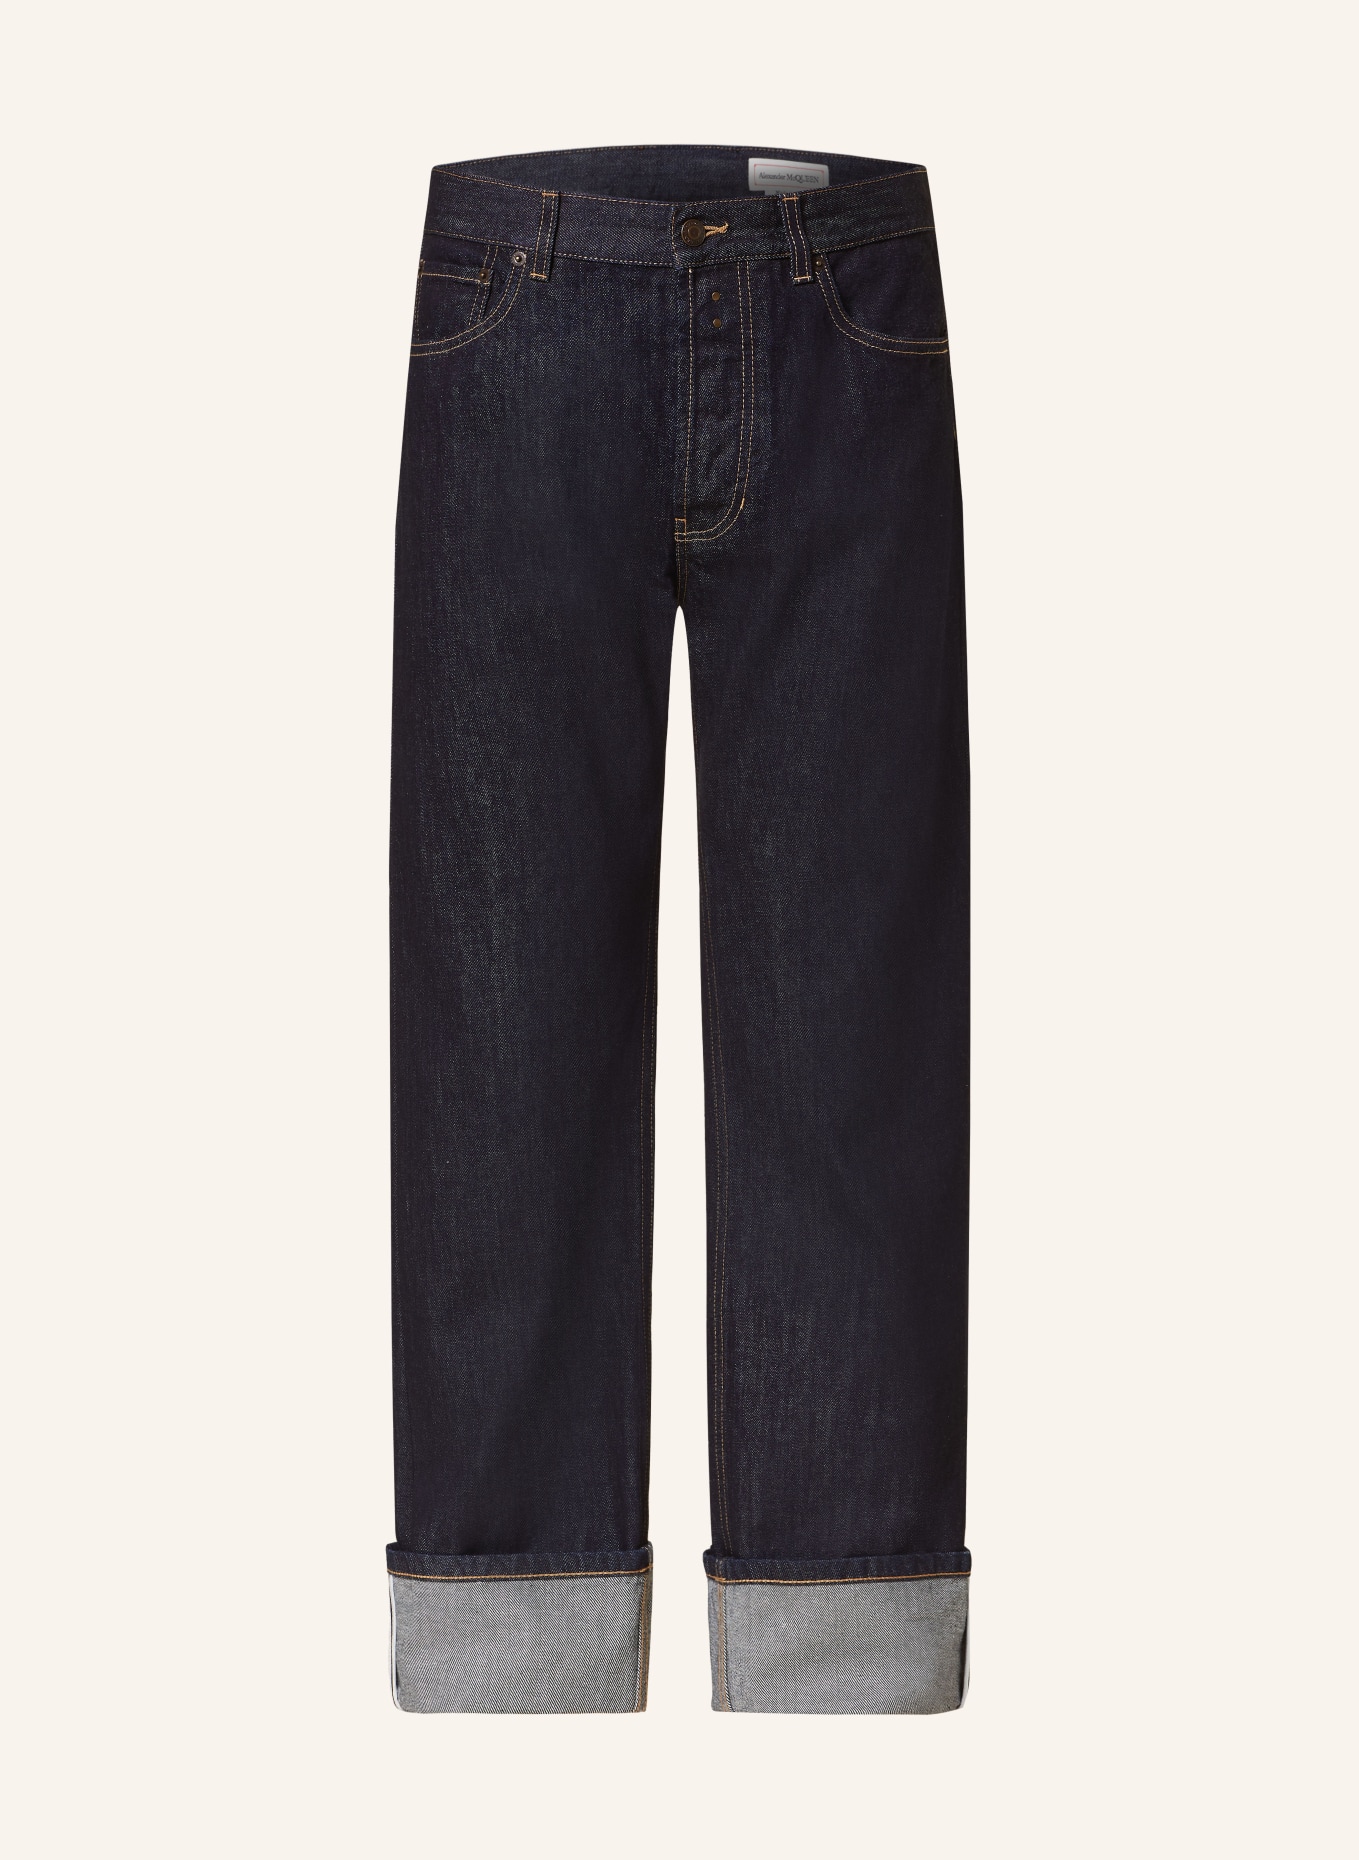 Alexander McQUEEN Jeans Regular Fit, Farbe: 4244 INDIGO (Bild 1)